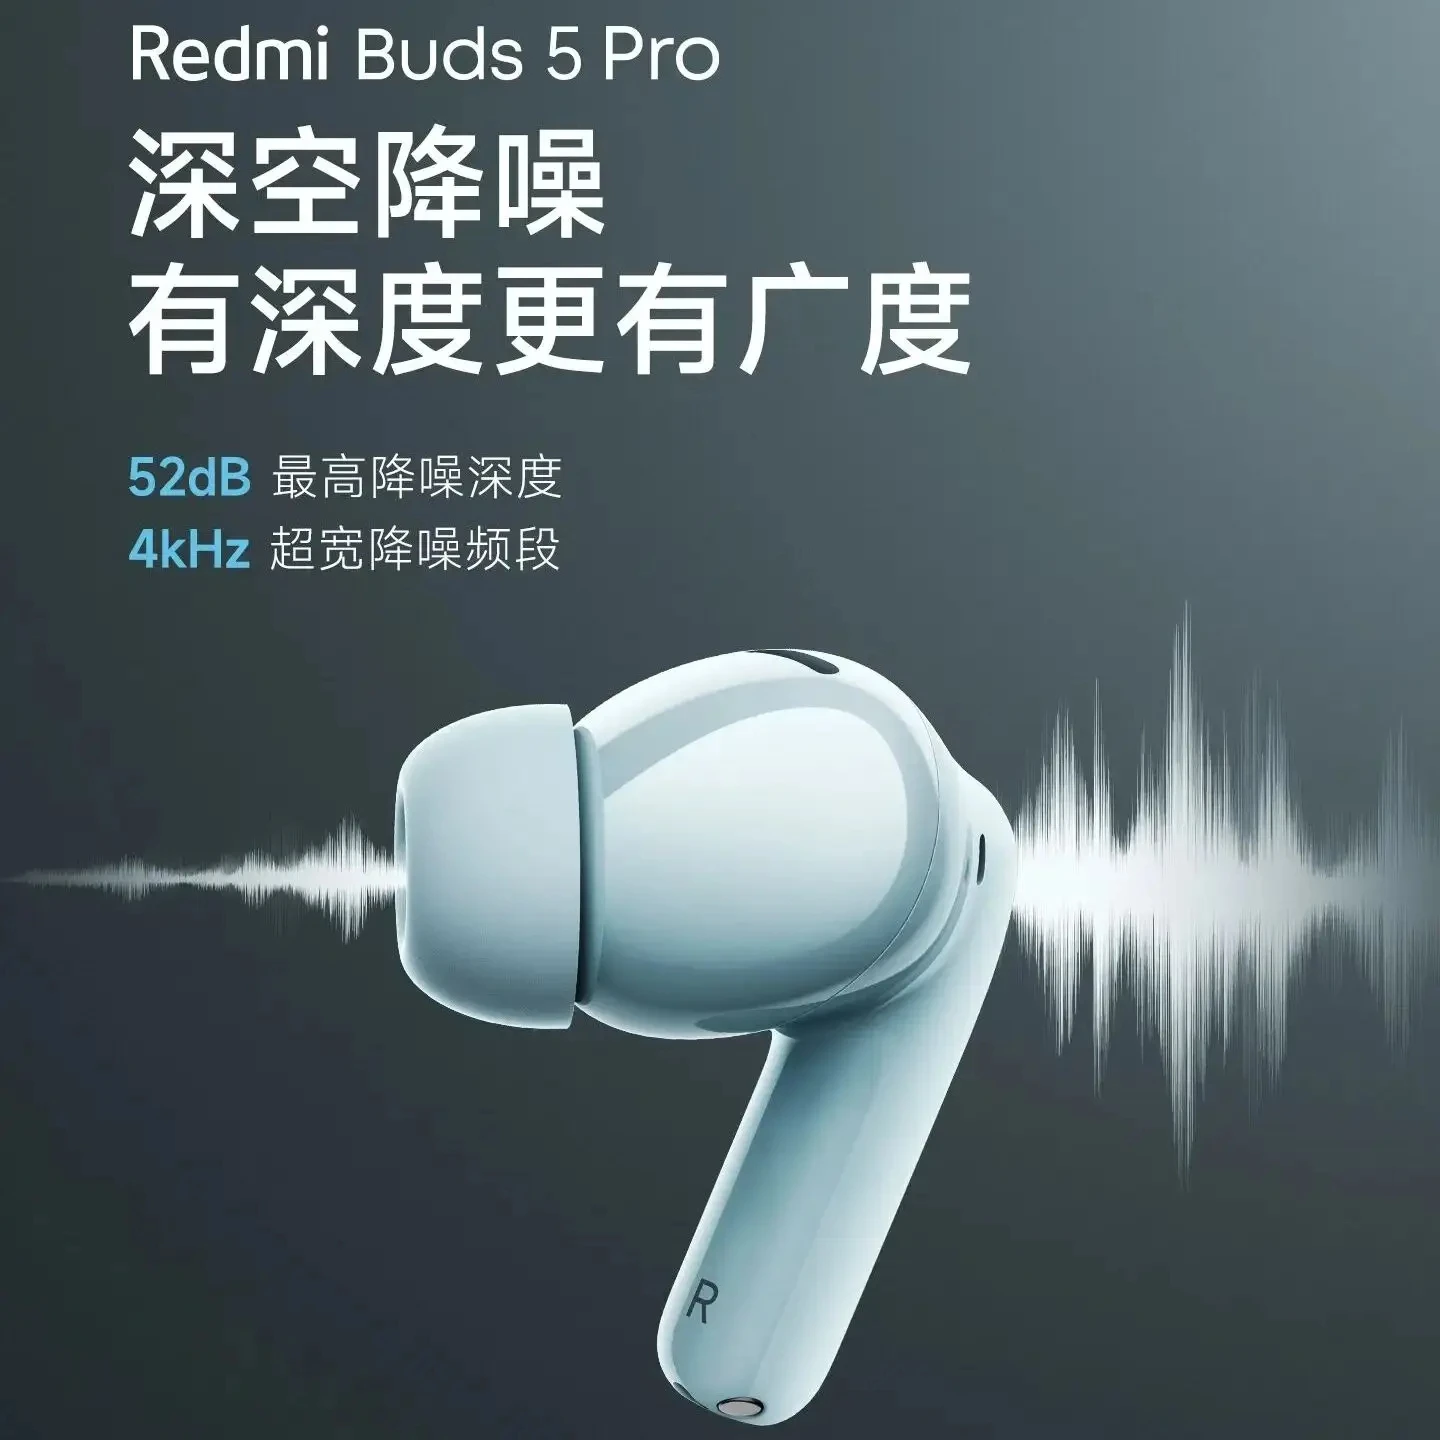 Xiaomi Redmi Buds 5 Pro eSports edition goes on sale